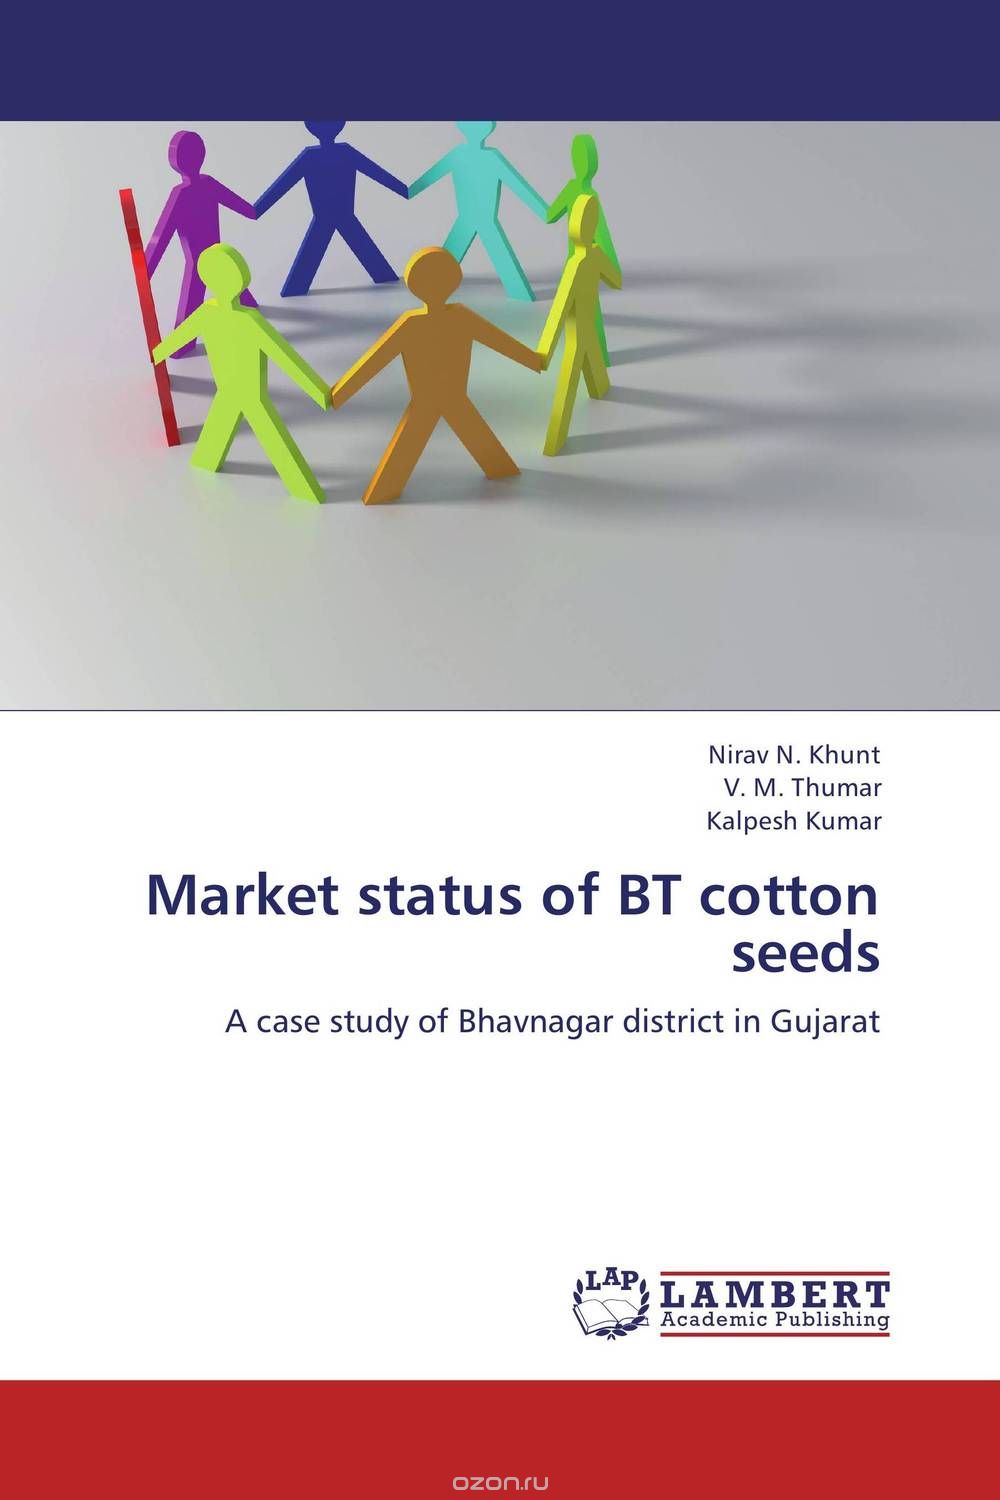 Скачать книгу "Market status of BT cotton seeds"